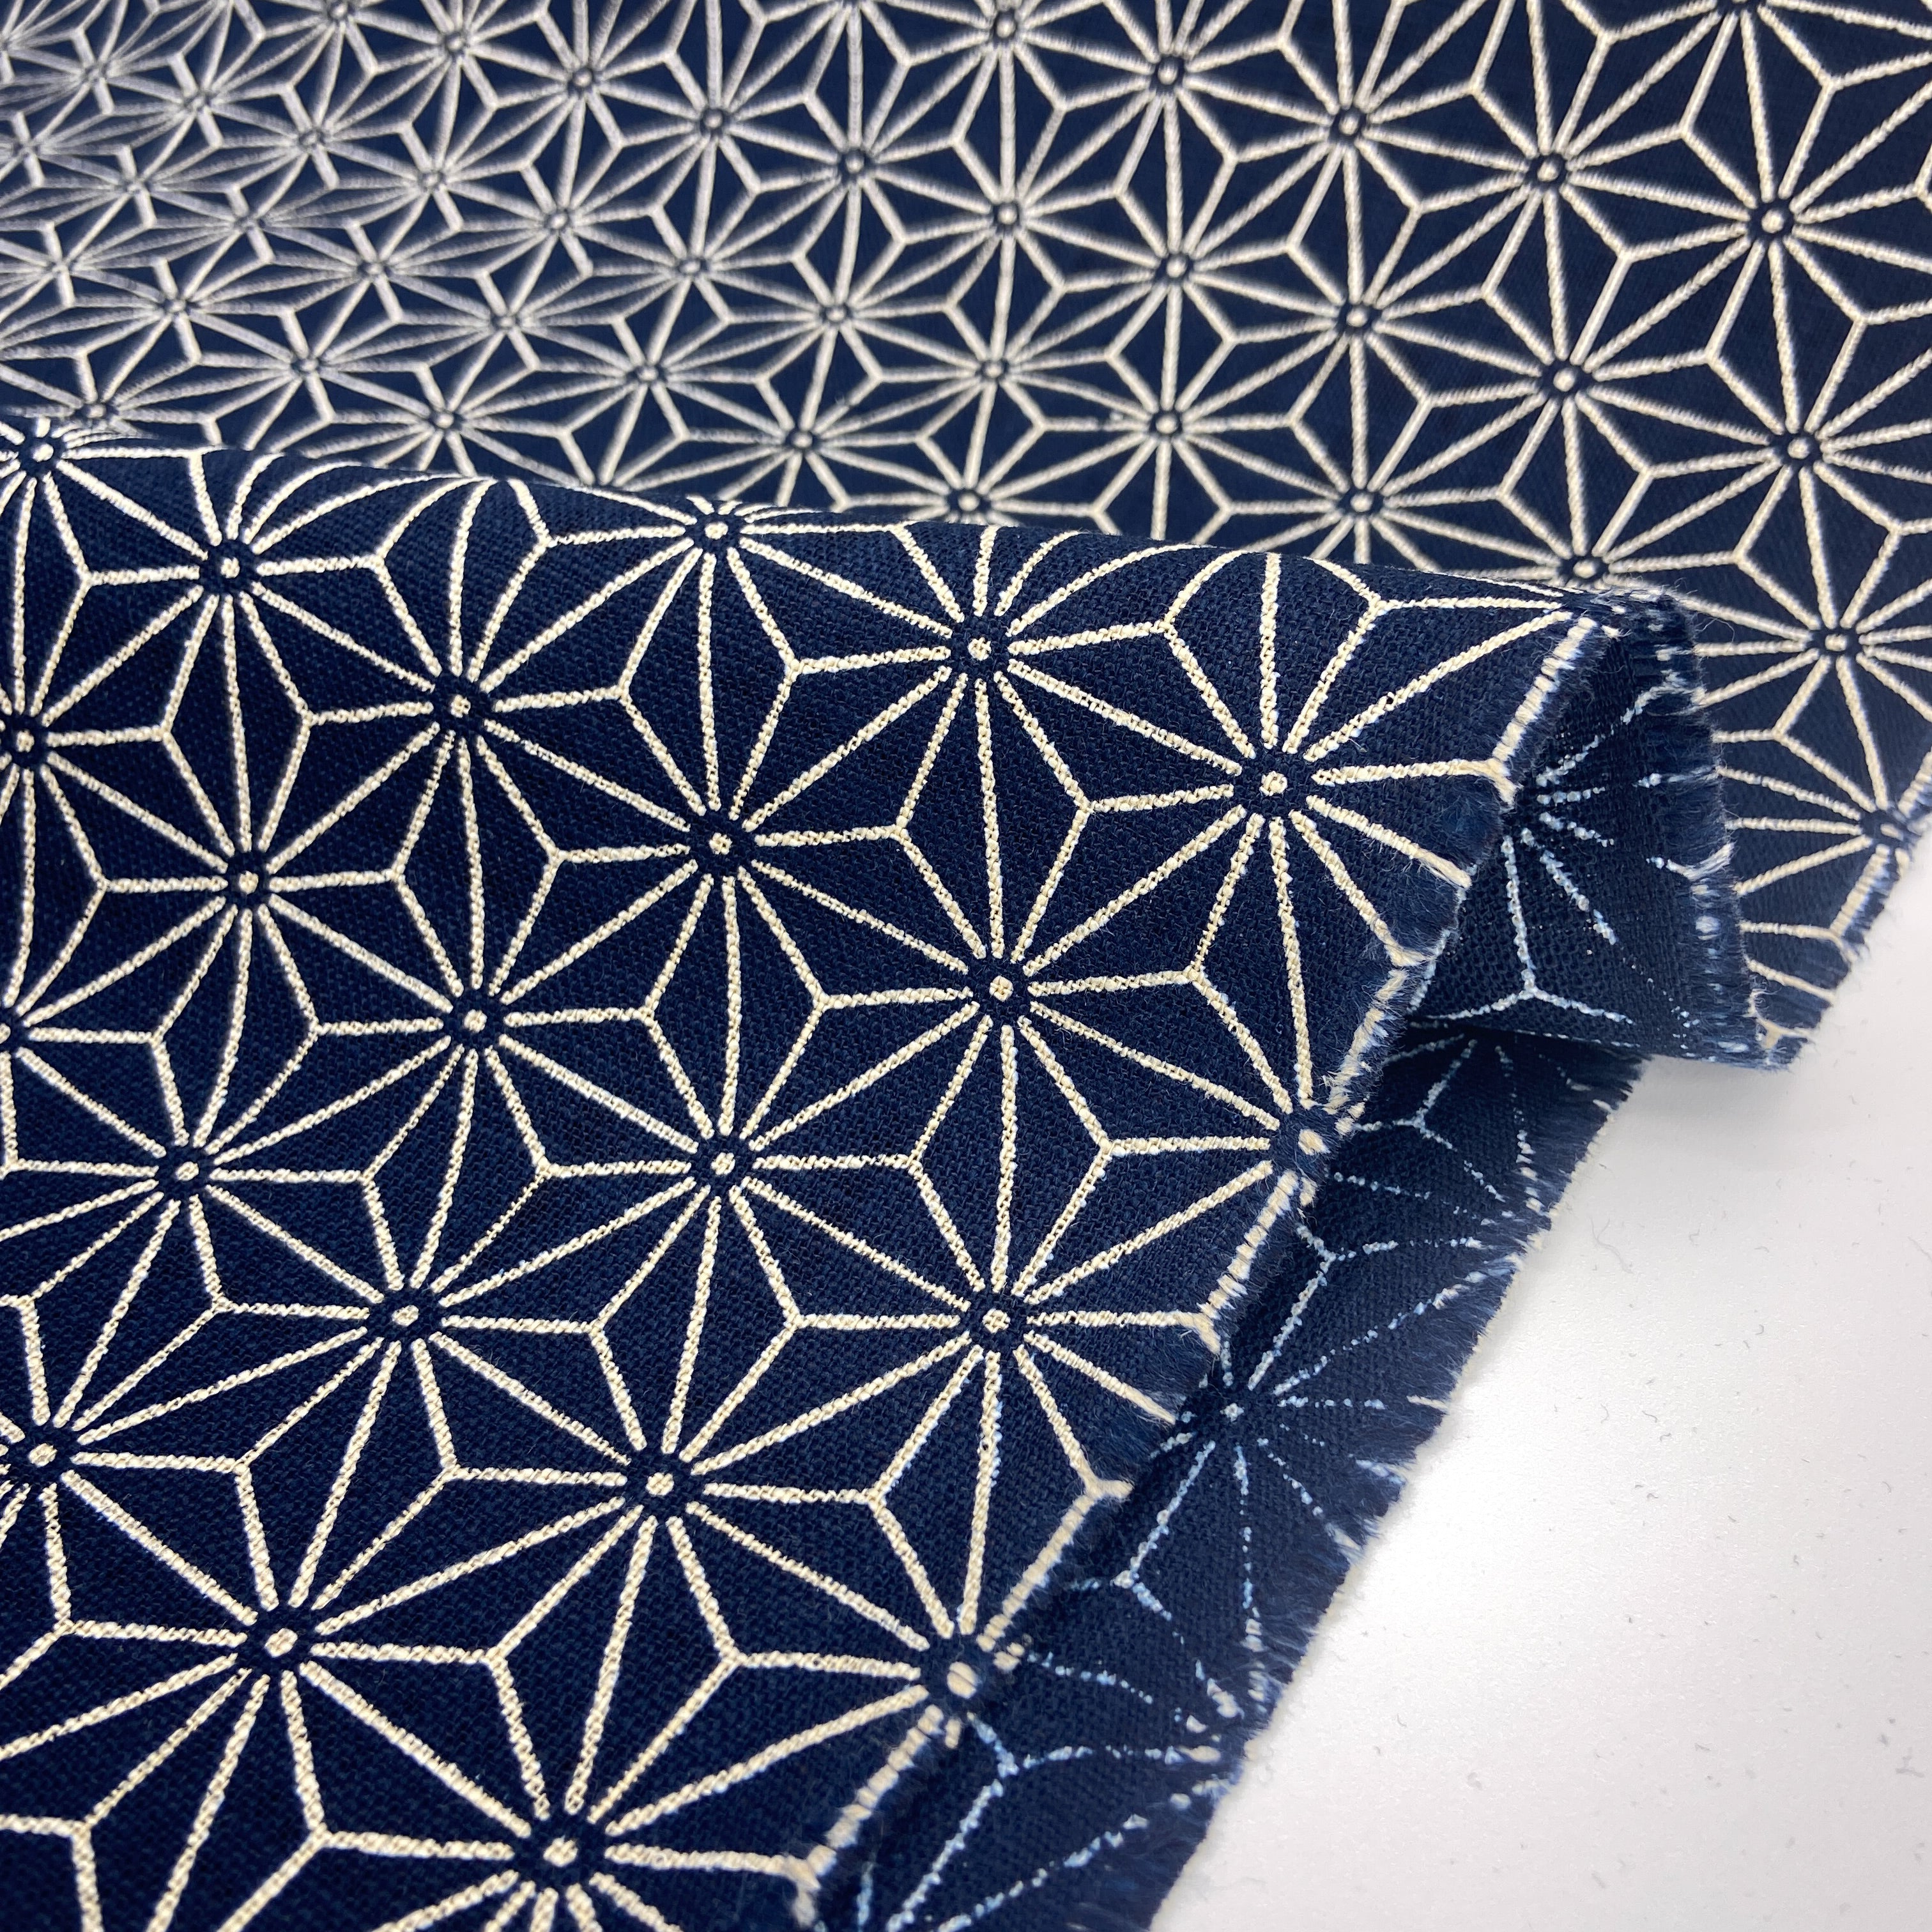 Japanese Cotton Uneven Yarns Sheeting Print - Indigo Hemp Leaves